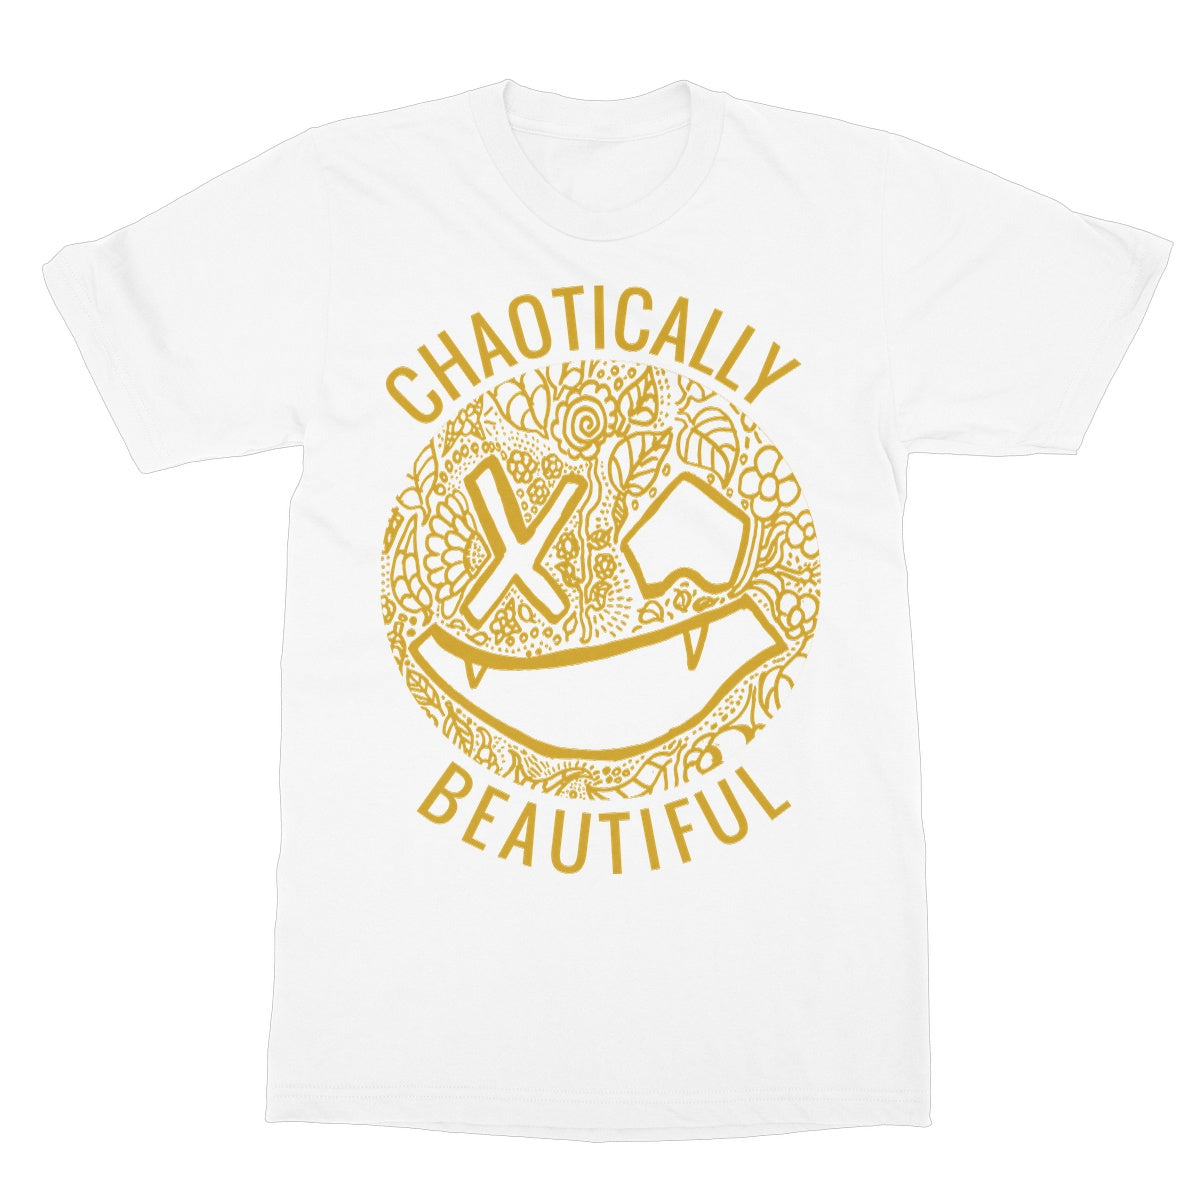 Tee shirt - Chaotically Beautiful